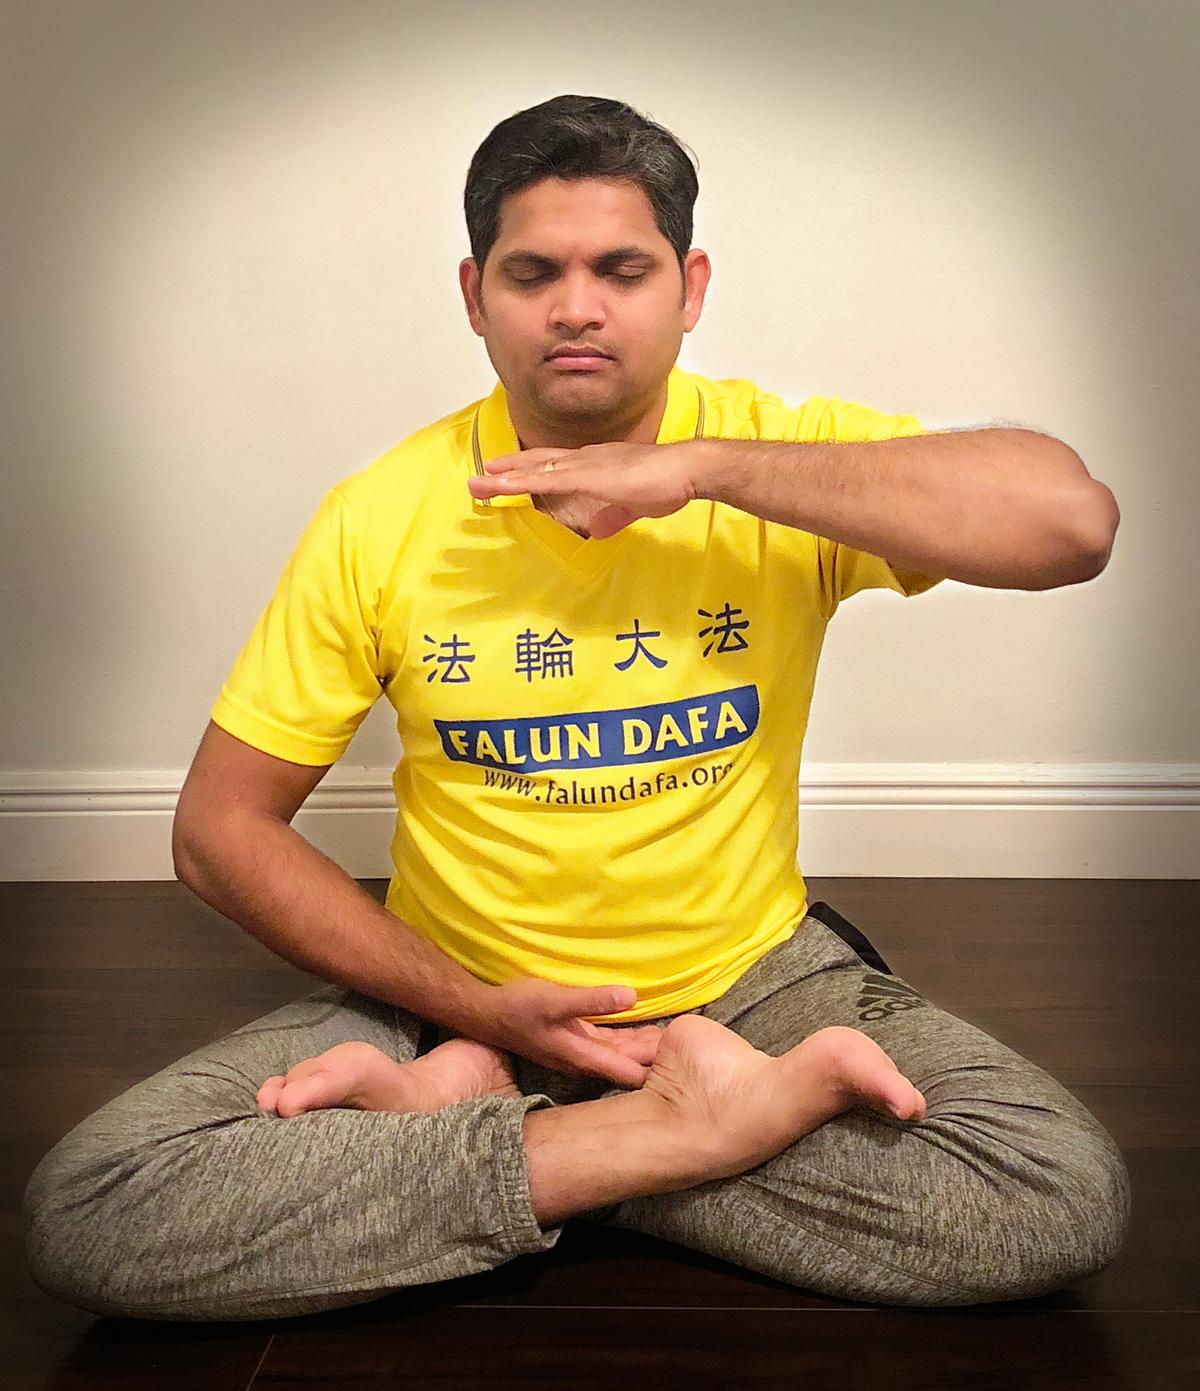 Rakesh practicing the fifth exercise of Falun Dafa. (Photo courtesy of Rakesh Nayak)